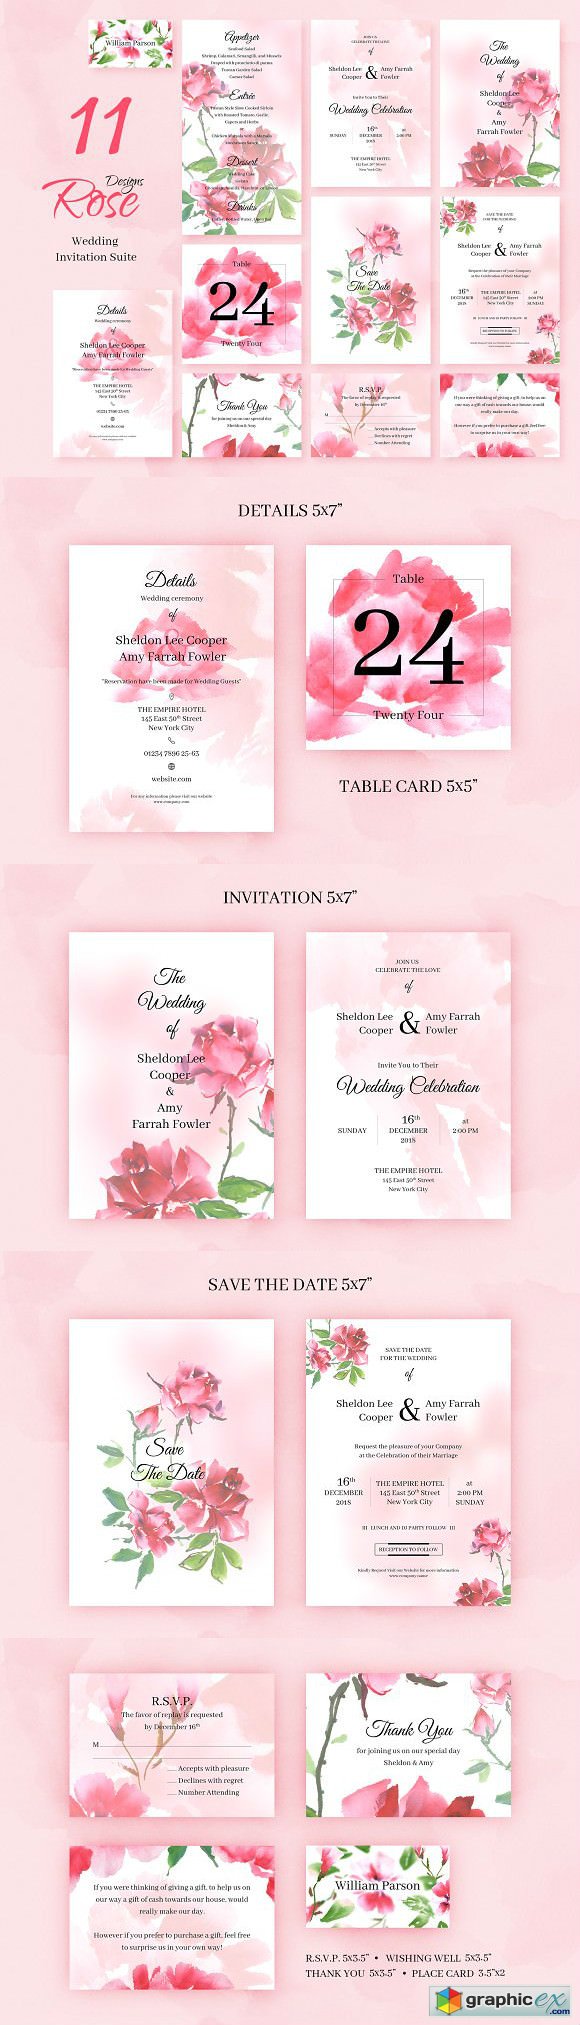 Rose Wedding Invitation Package